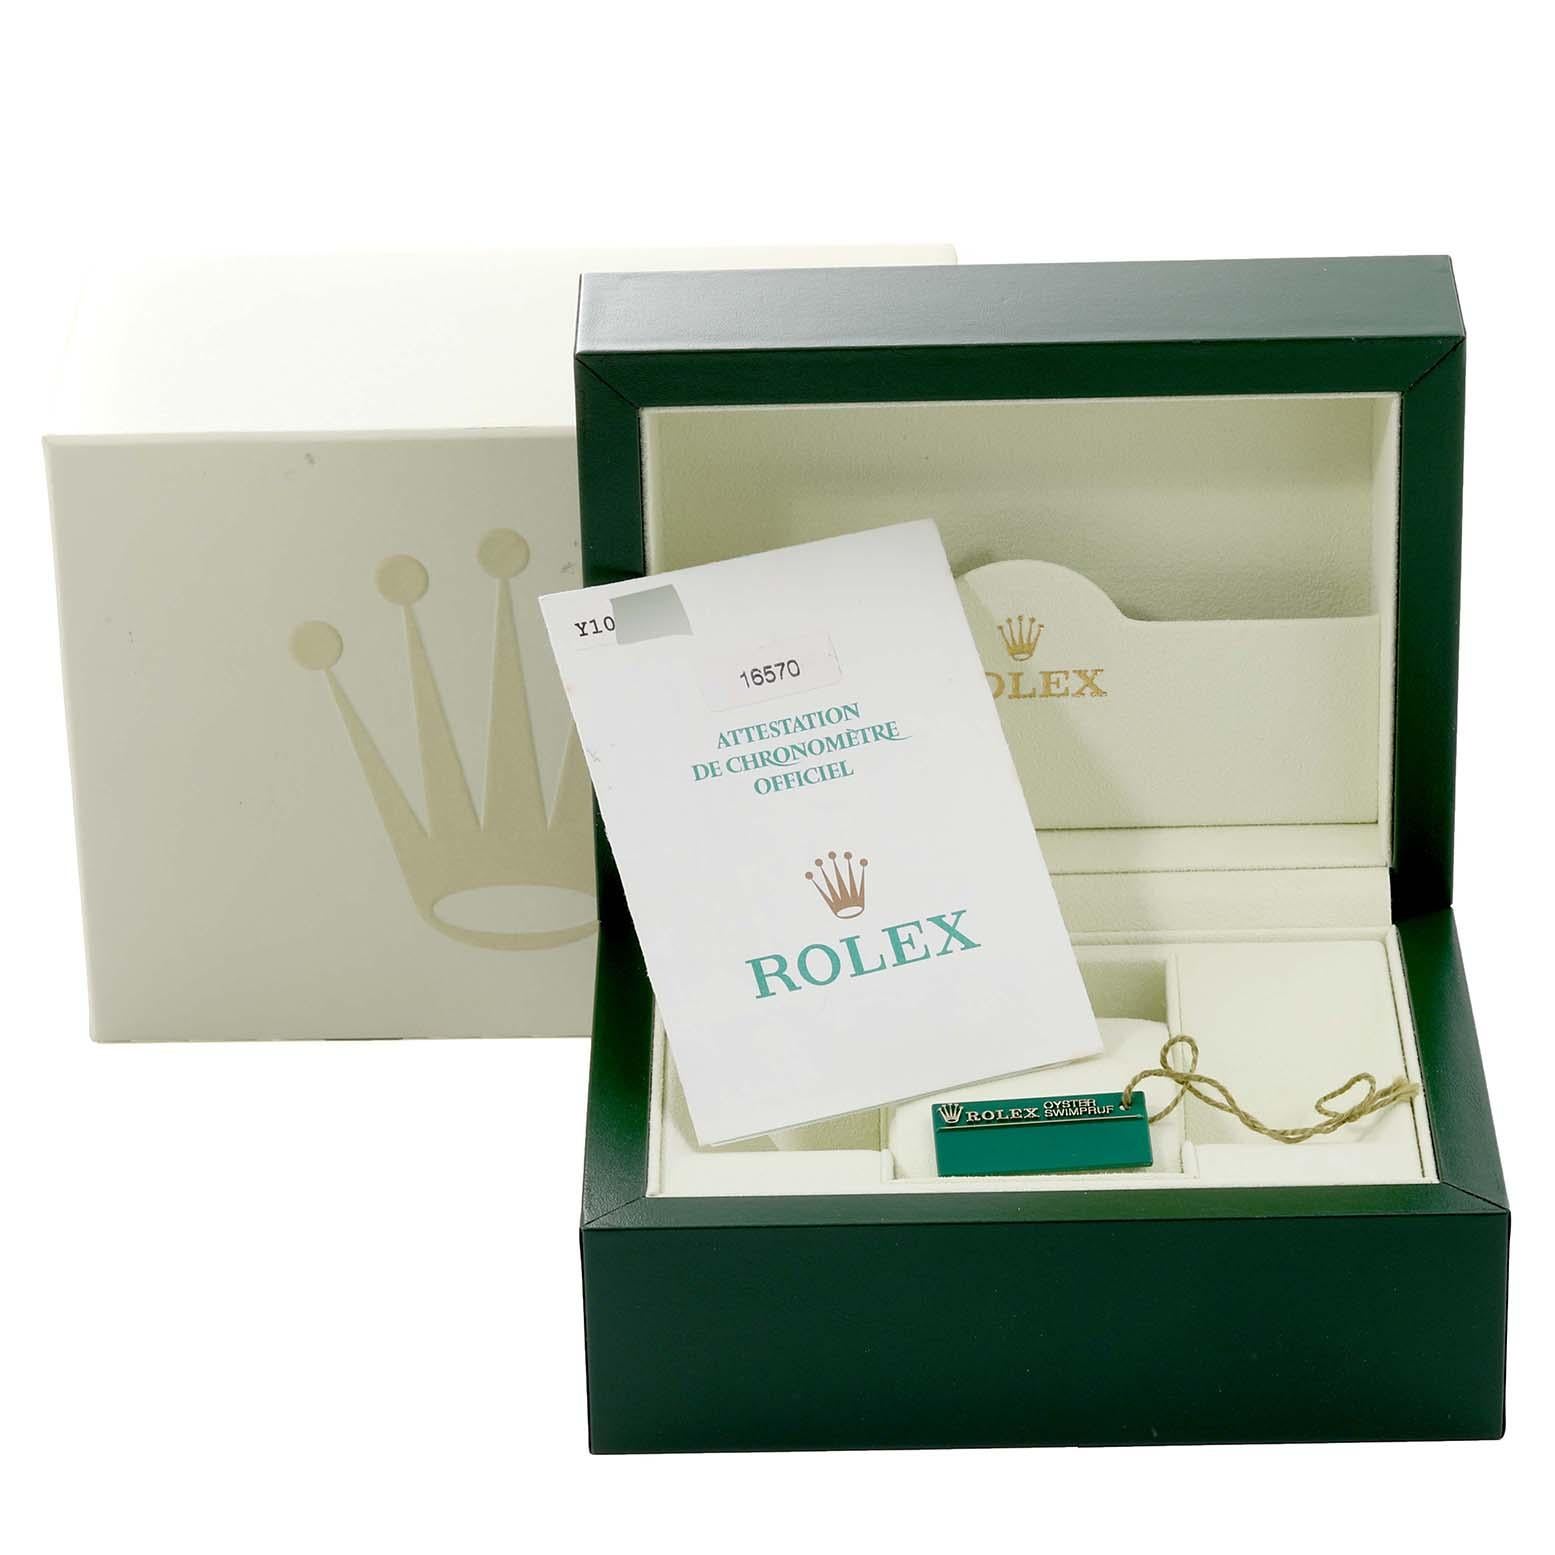 Rolex Explorer II 40mm Polar White Dial Steel Mens Watch 16570 Box Papers en vente 7